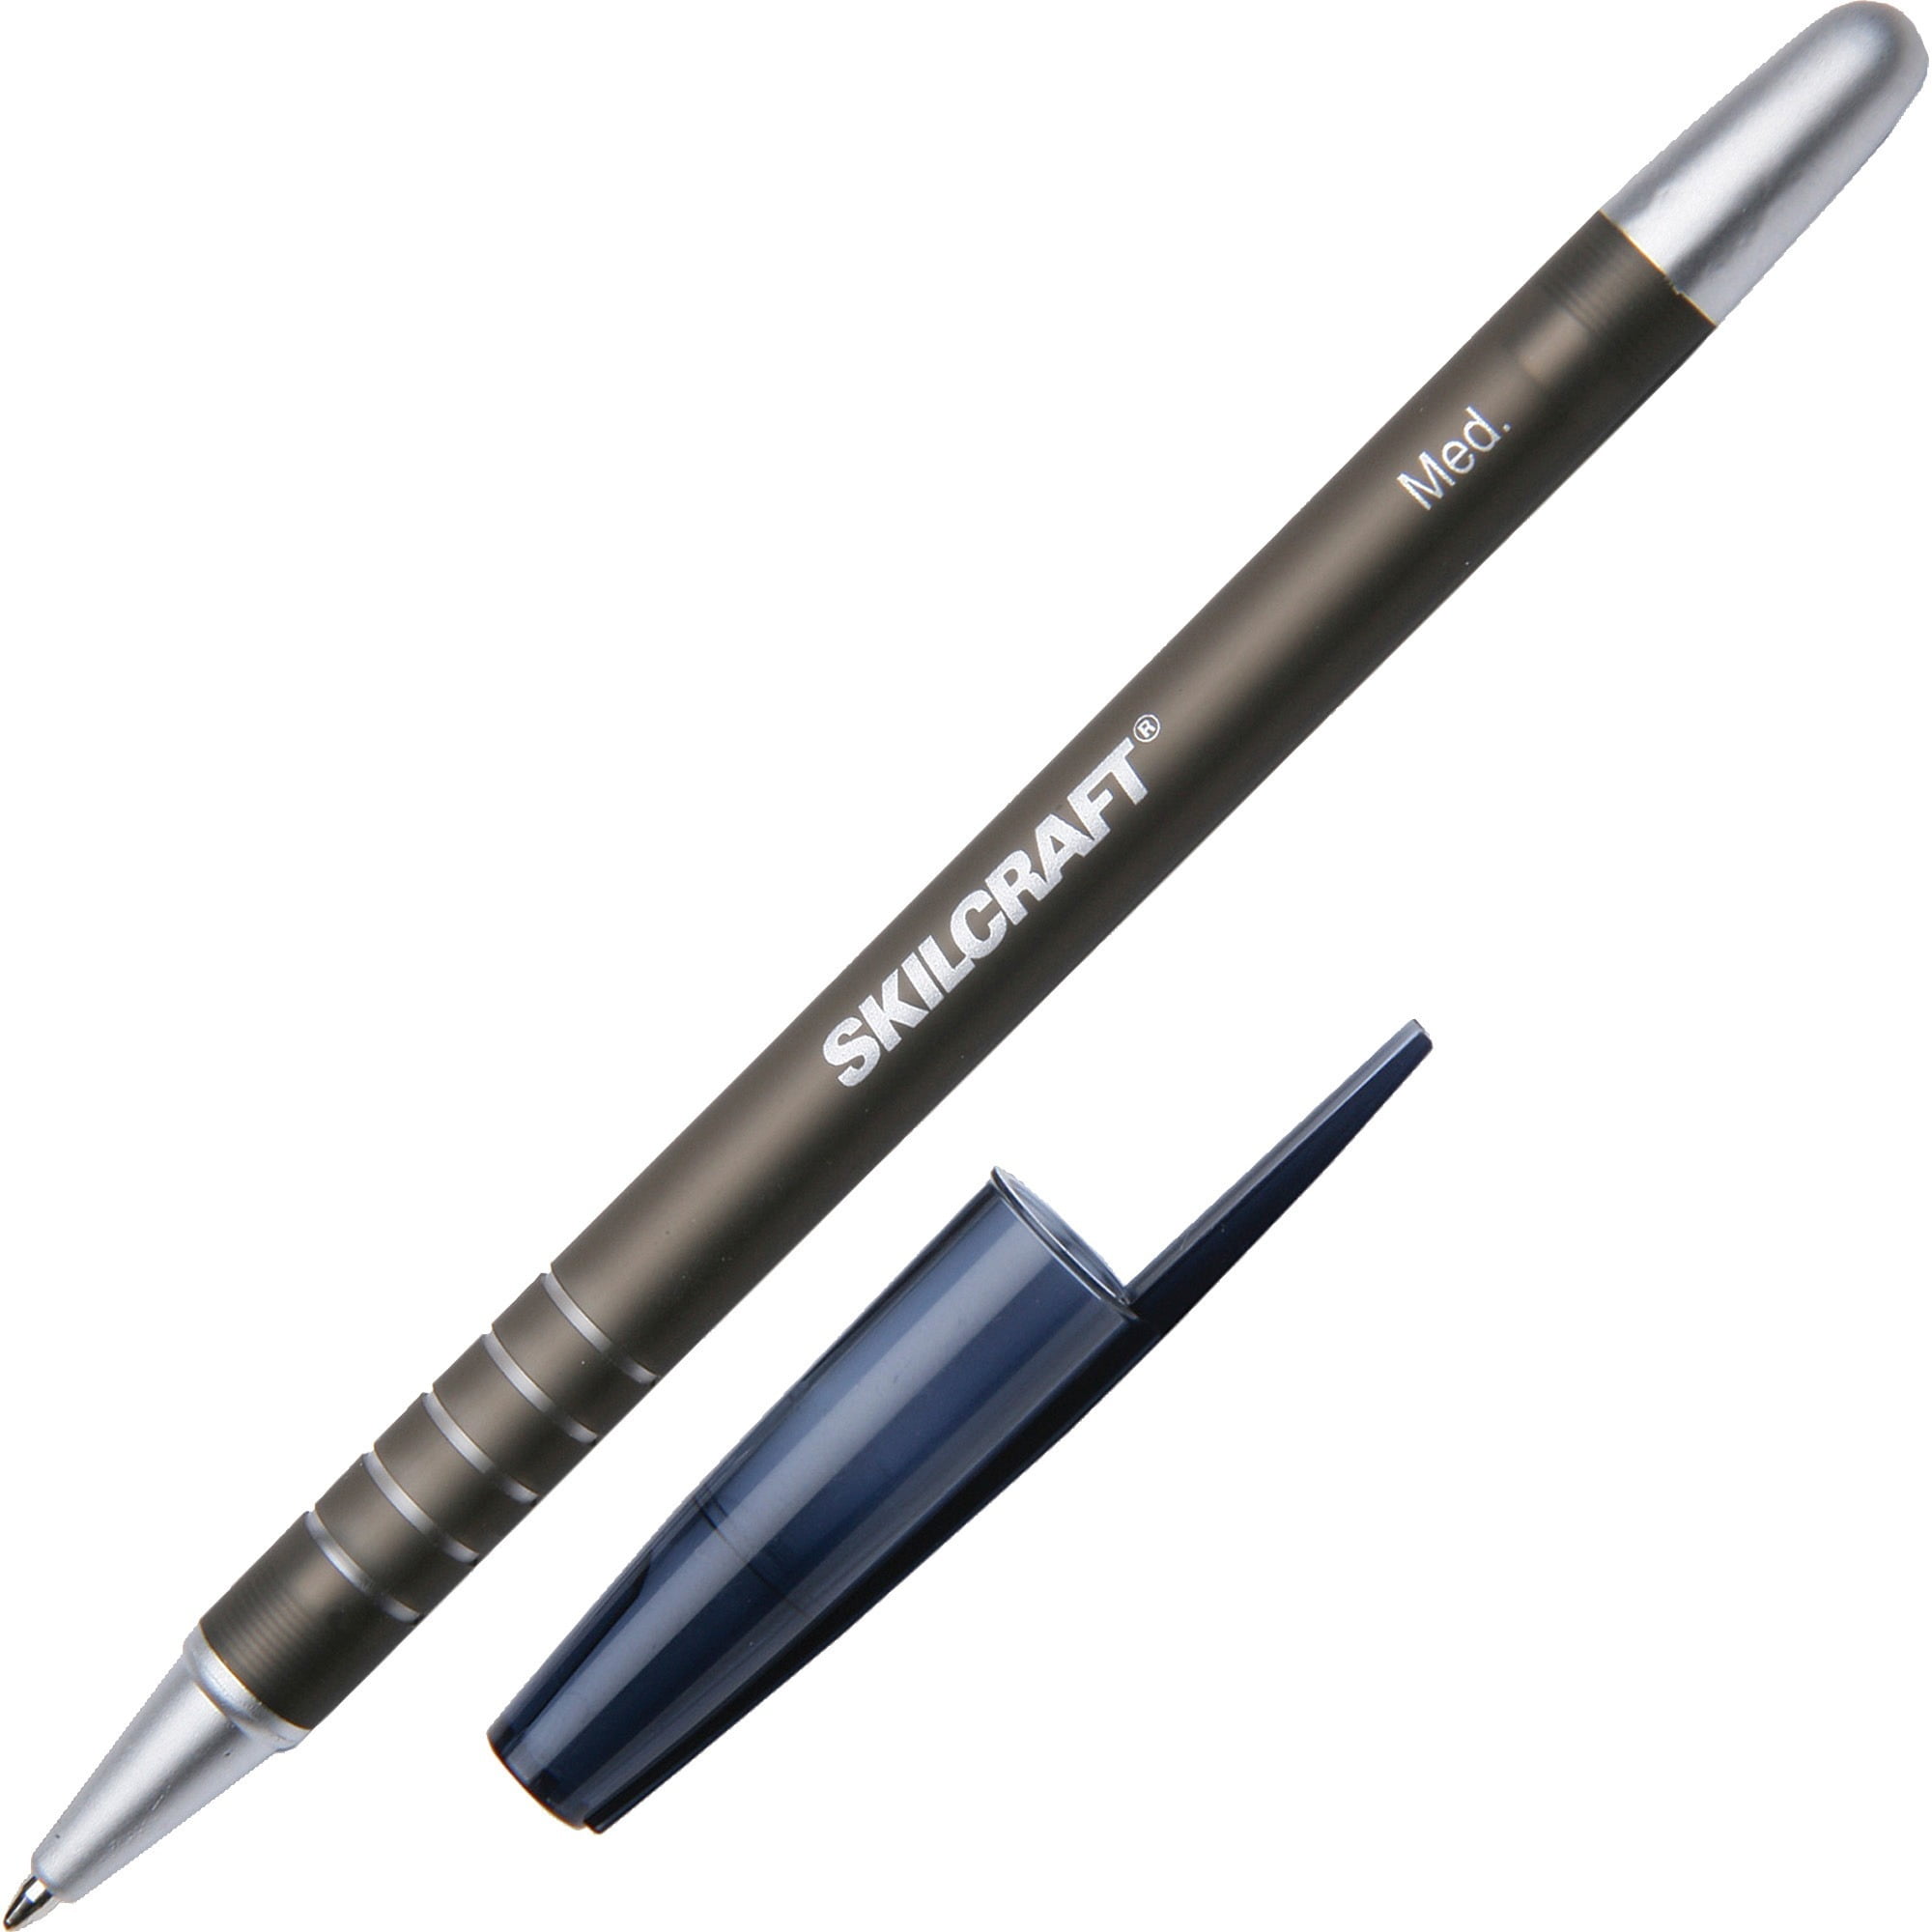 Unibene 12 Pcs Glitter Ballpoint Pens, Cute Pretty Metal Retractable  Journaling Pens for Women Girls Gifts Office Supplies, Black Ink Medium  Point 1mm